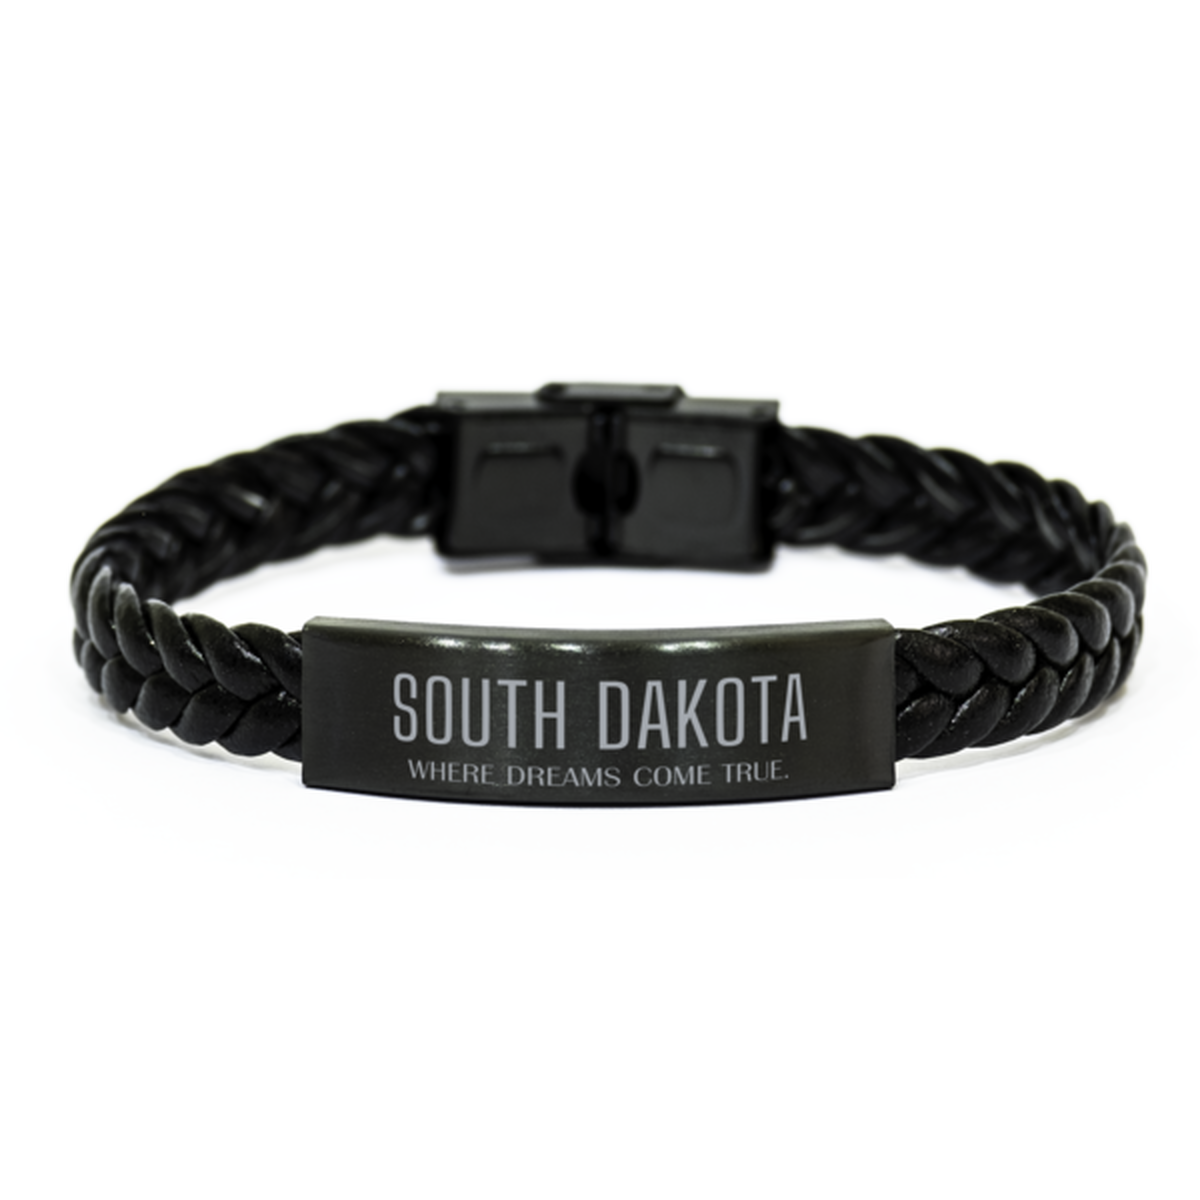 Love South Dakota State Braided Leather Bracelet, South Dakota Where dreams come true, Birthday Inspirational Gifts For South Dakota Men, Women, Friends